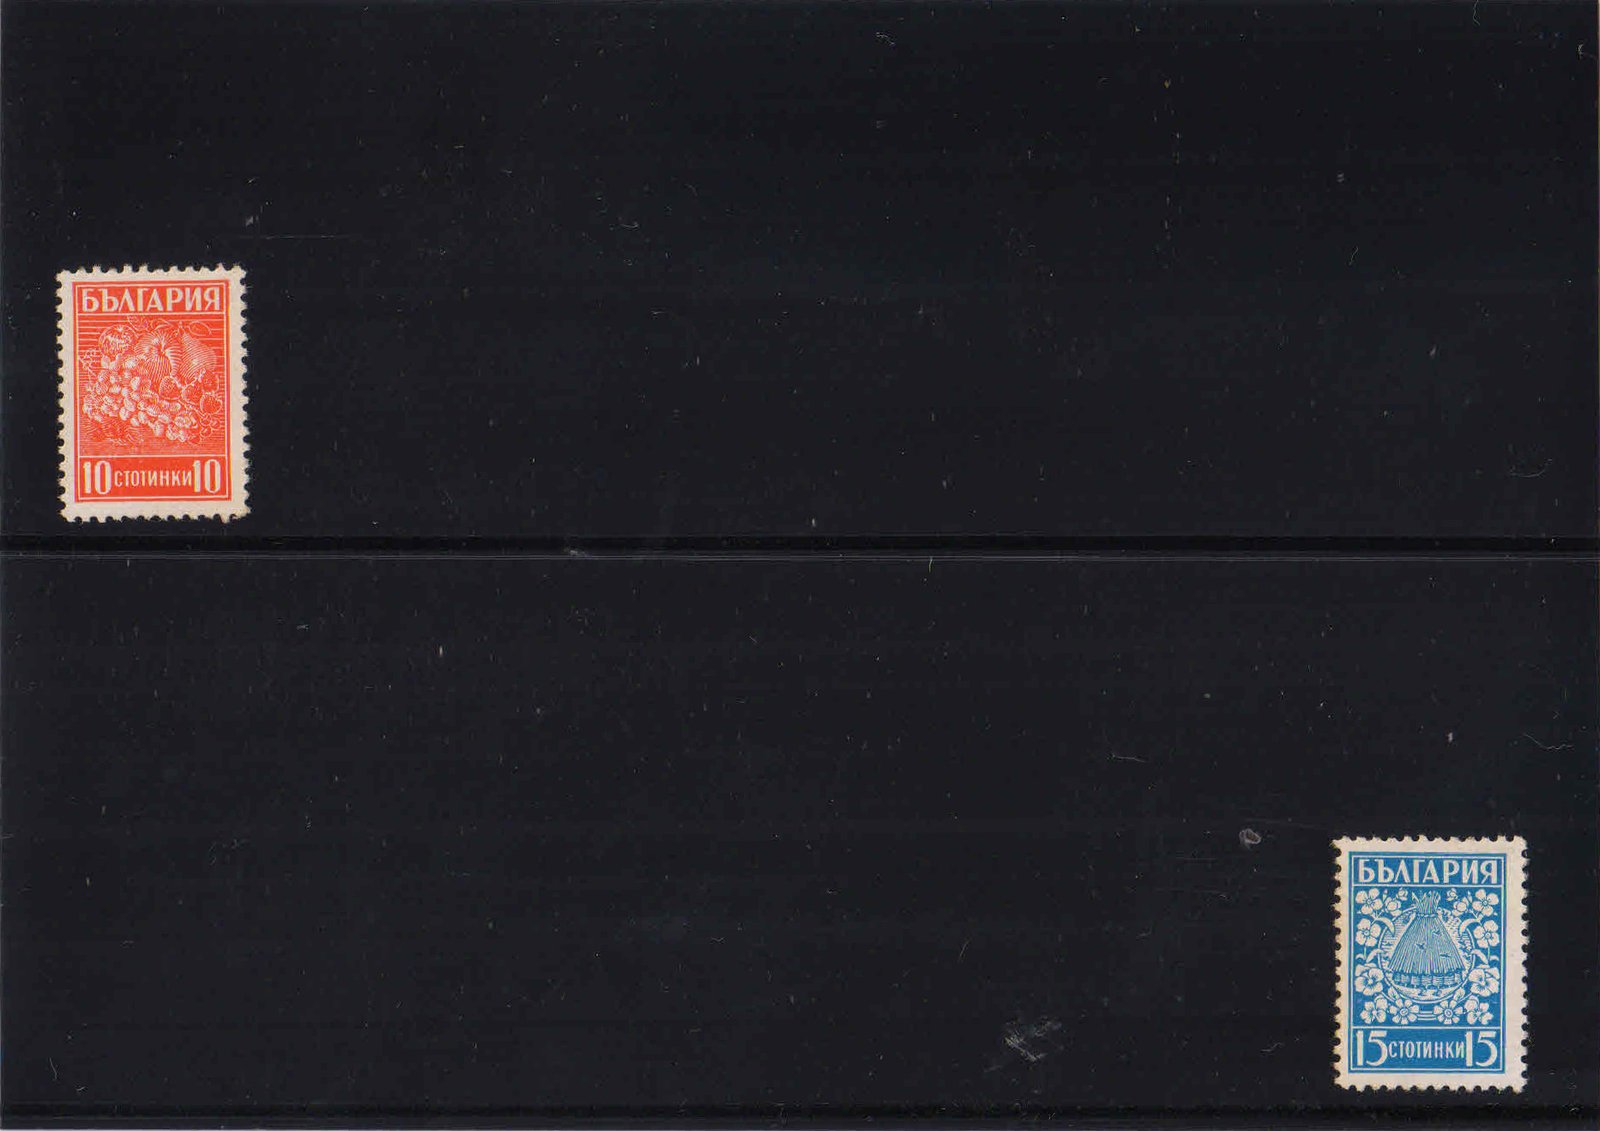 Prinz Premium STOCK CARDS, Premium Polyster Film, 2 Stripes, Size 158 x 111 mm (10 Cards)